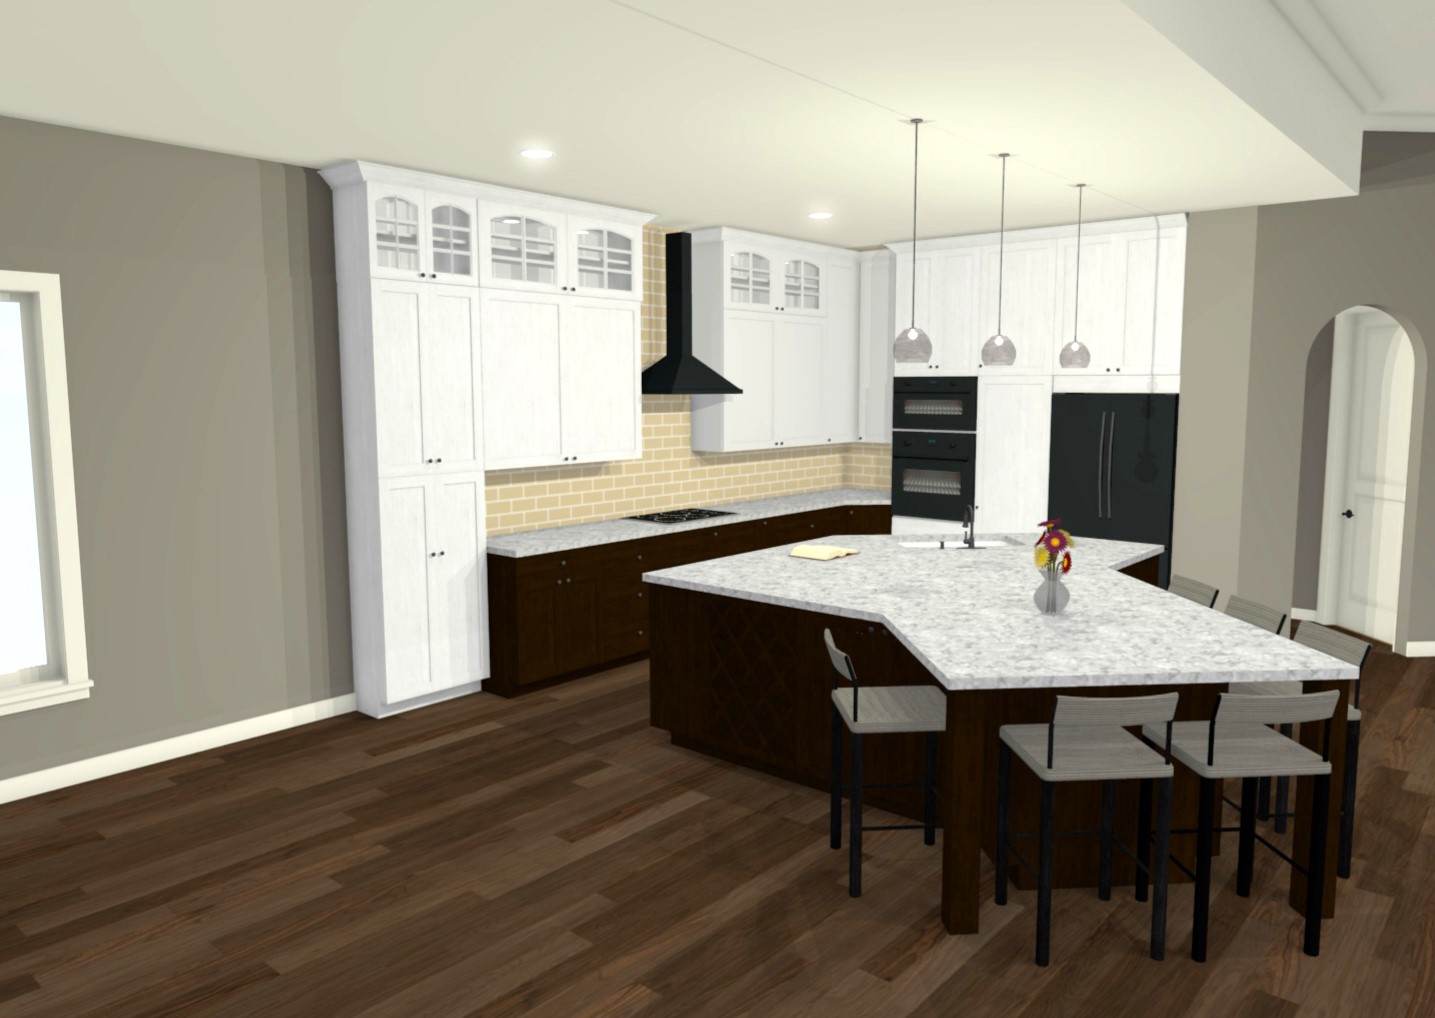 Open concept kitchen renovation ideas